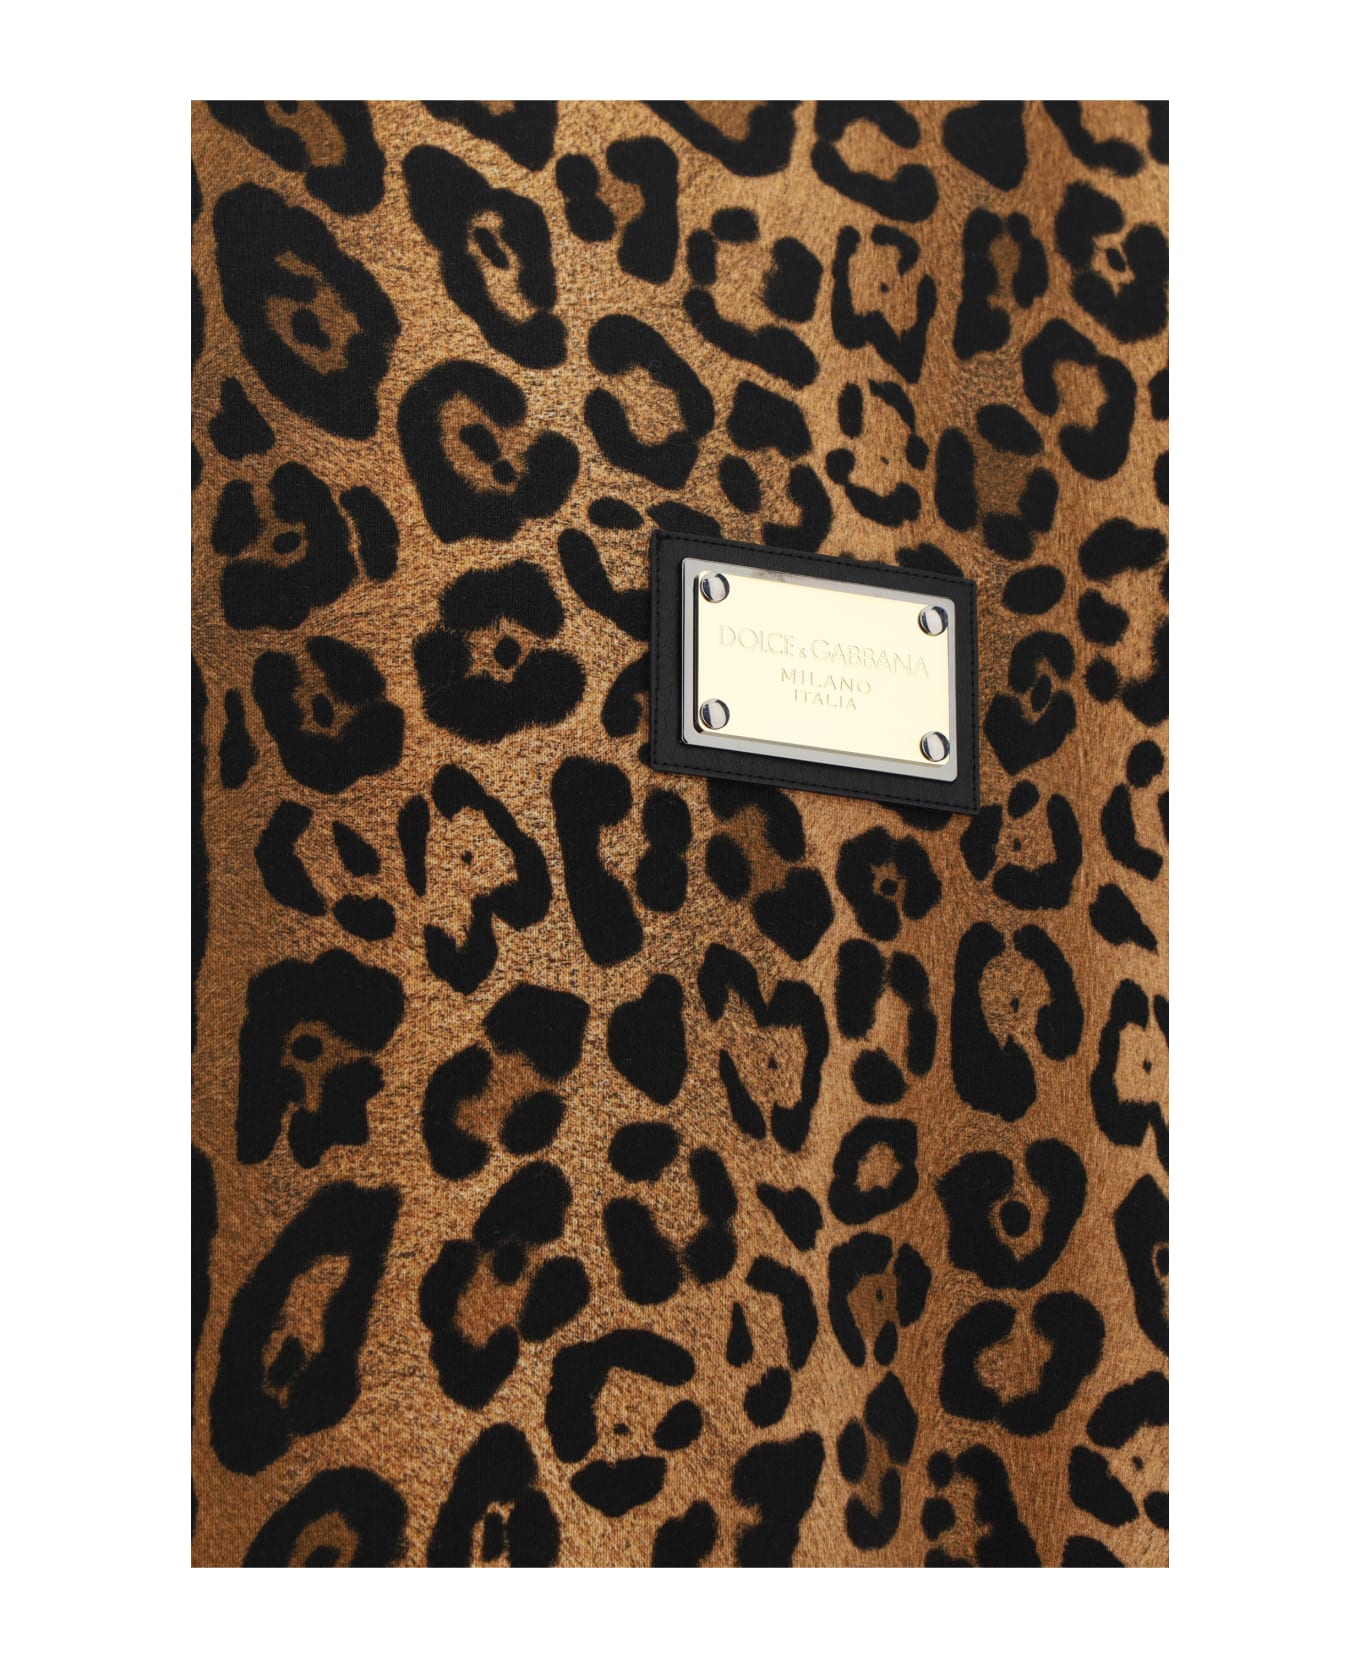 Dolce & Gabbana Leopard Print Sweatshirt - Dolce & Gabbana lace clutch bag